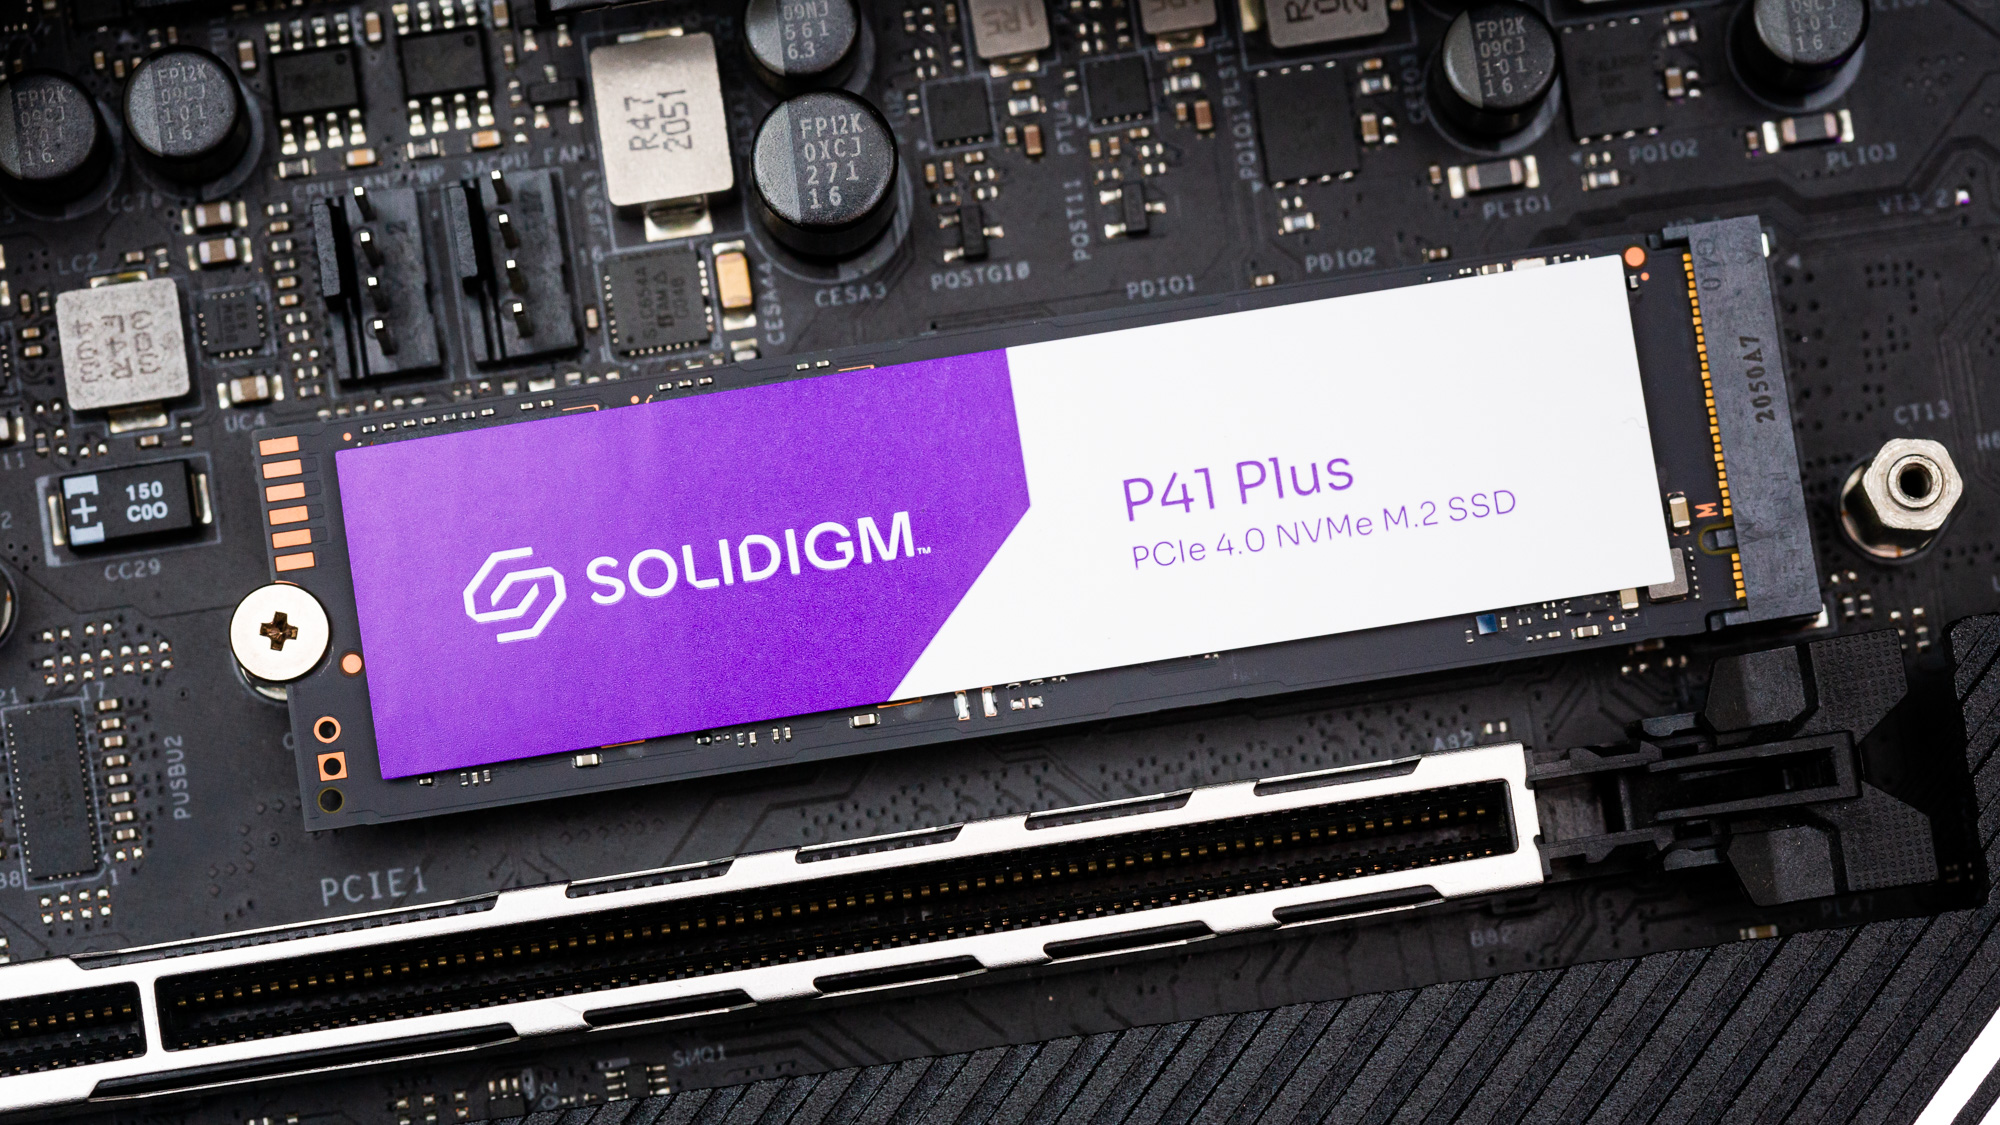 Solidigm P41 Plus SSD Review: Born in the Purple